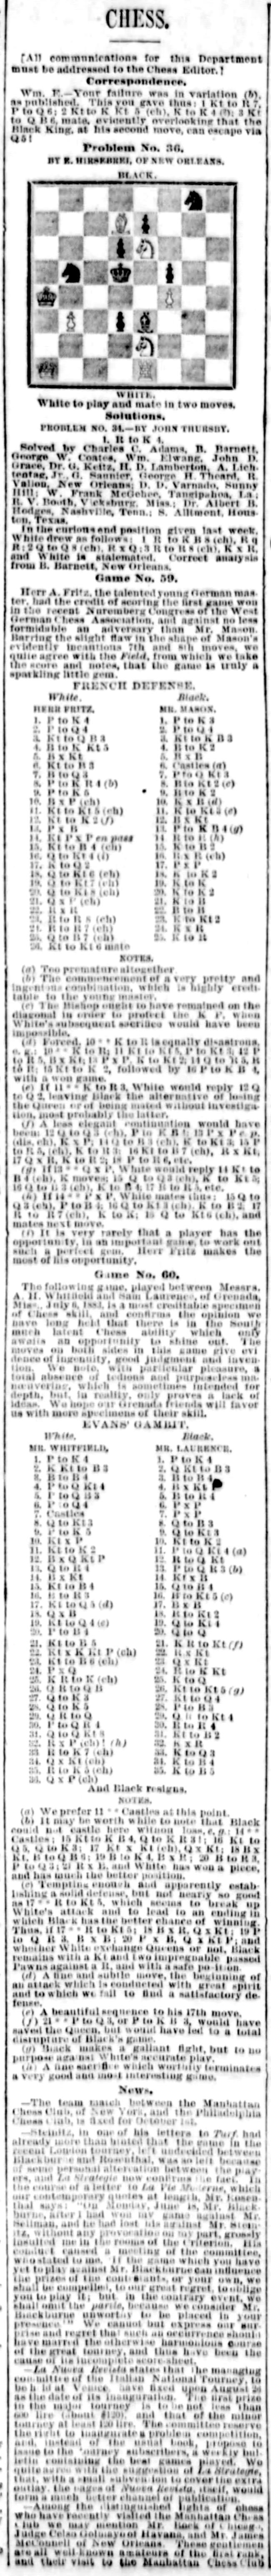 1883.08.12-01 New Orleans Times-Democrat.jpg